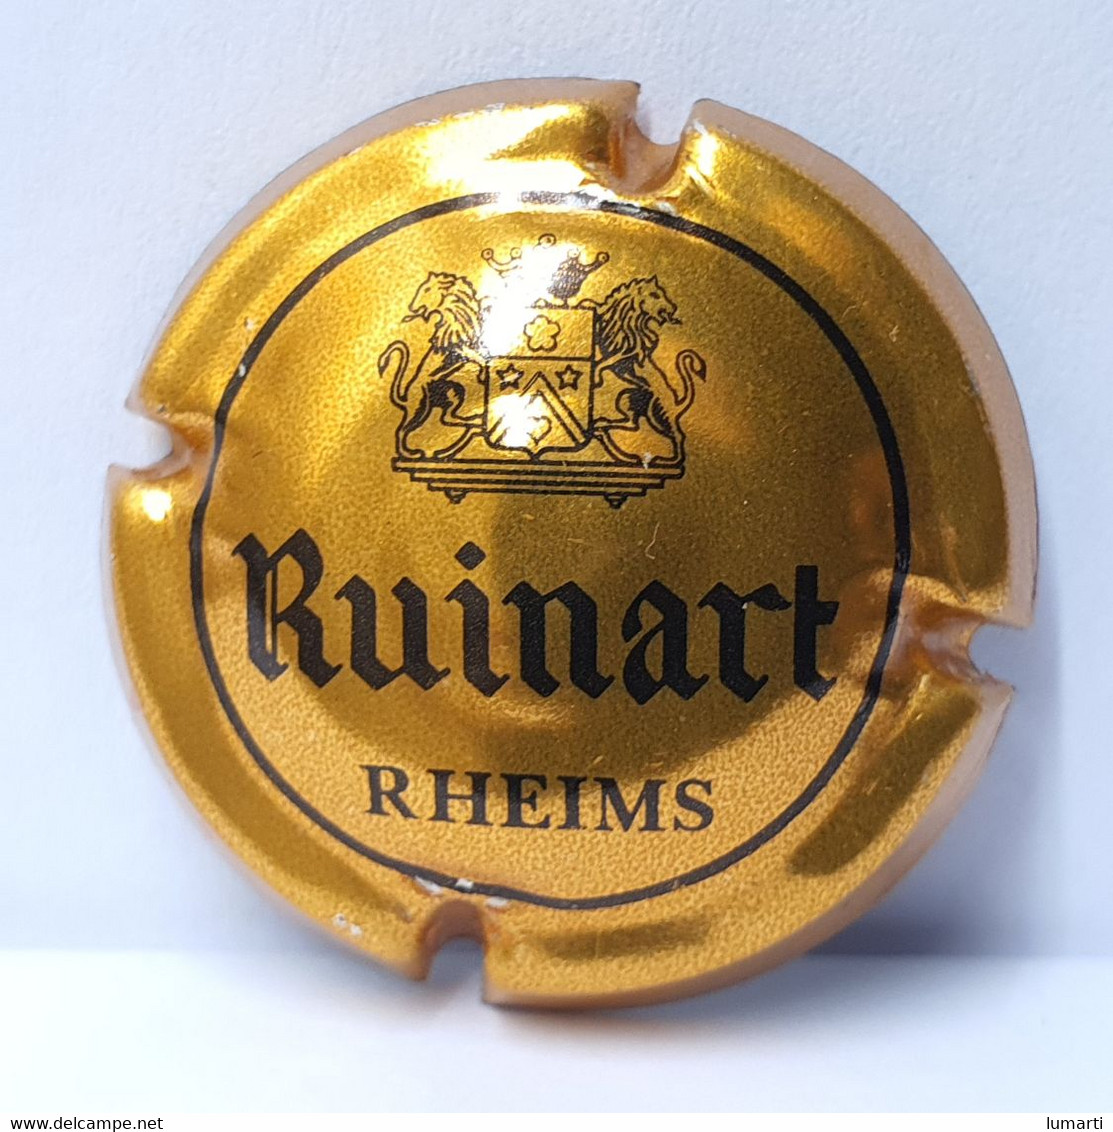 Capsule De Champagne - Ruinart - Rheims - 3 Traits Sous Ecusson - Or Et Noir - - Ruinart Ruinart